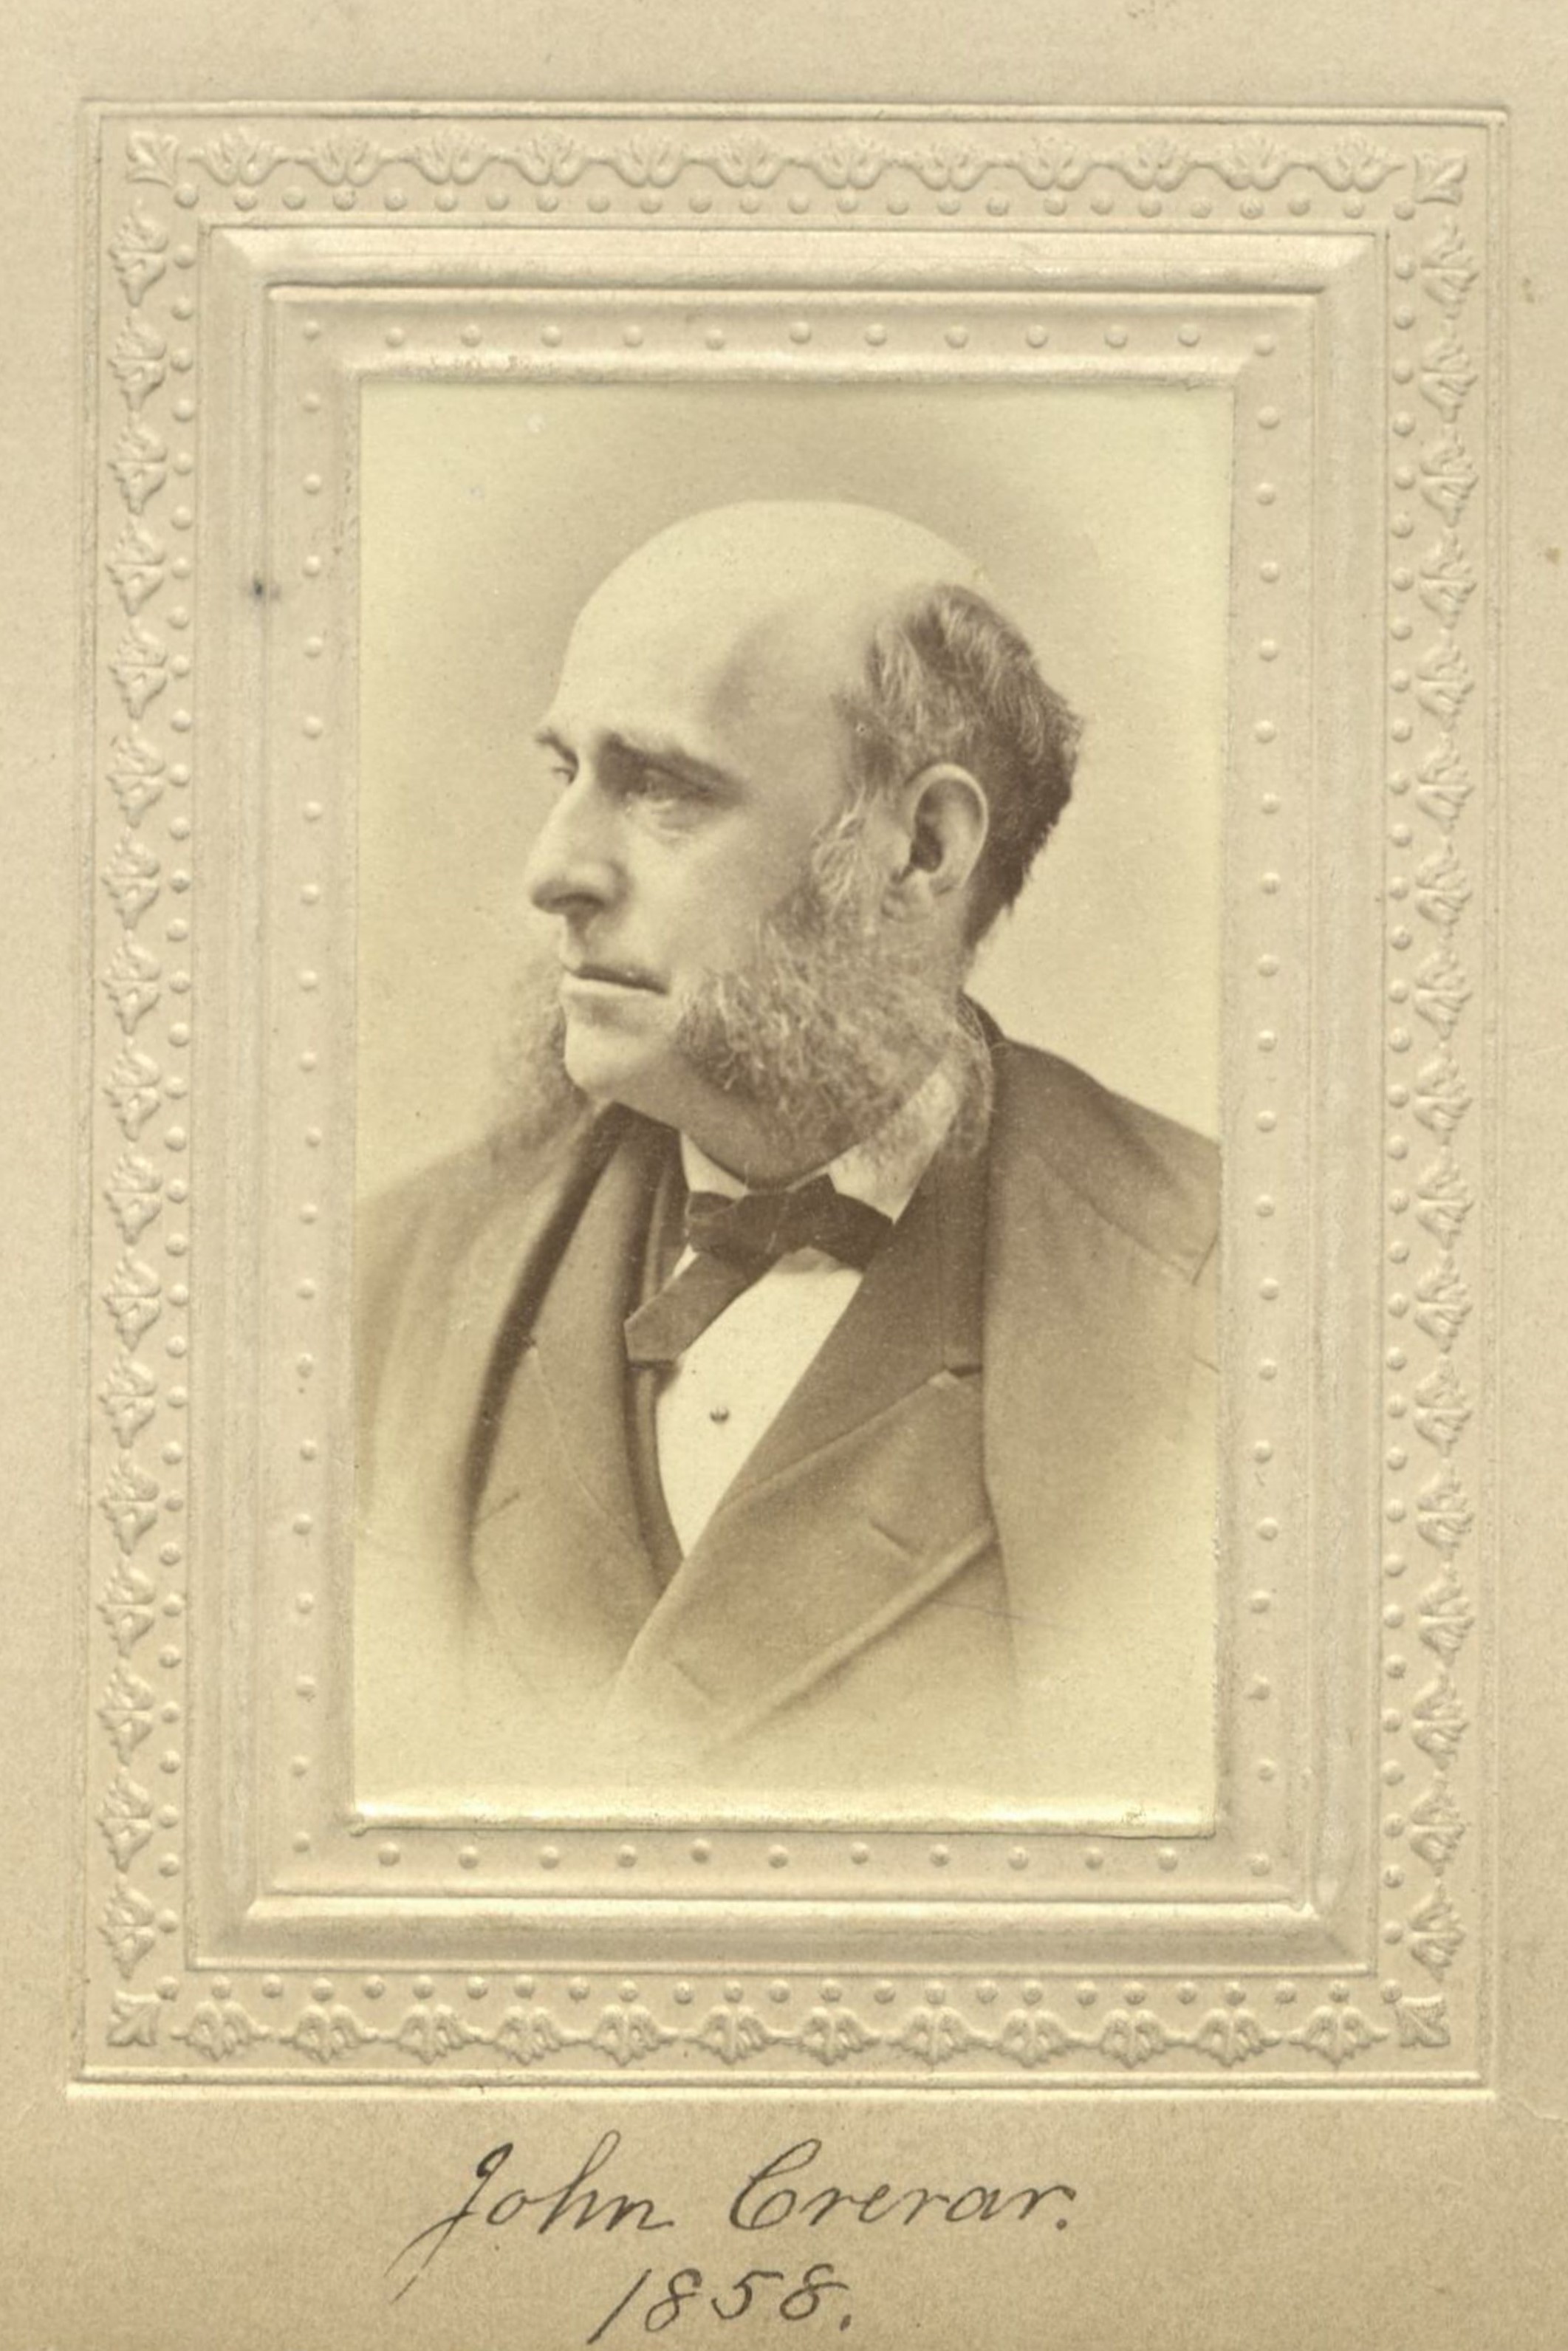 Member portrait of John Crerar